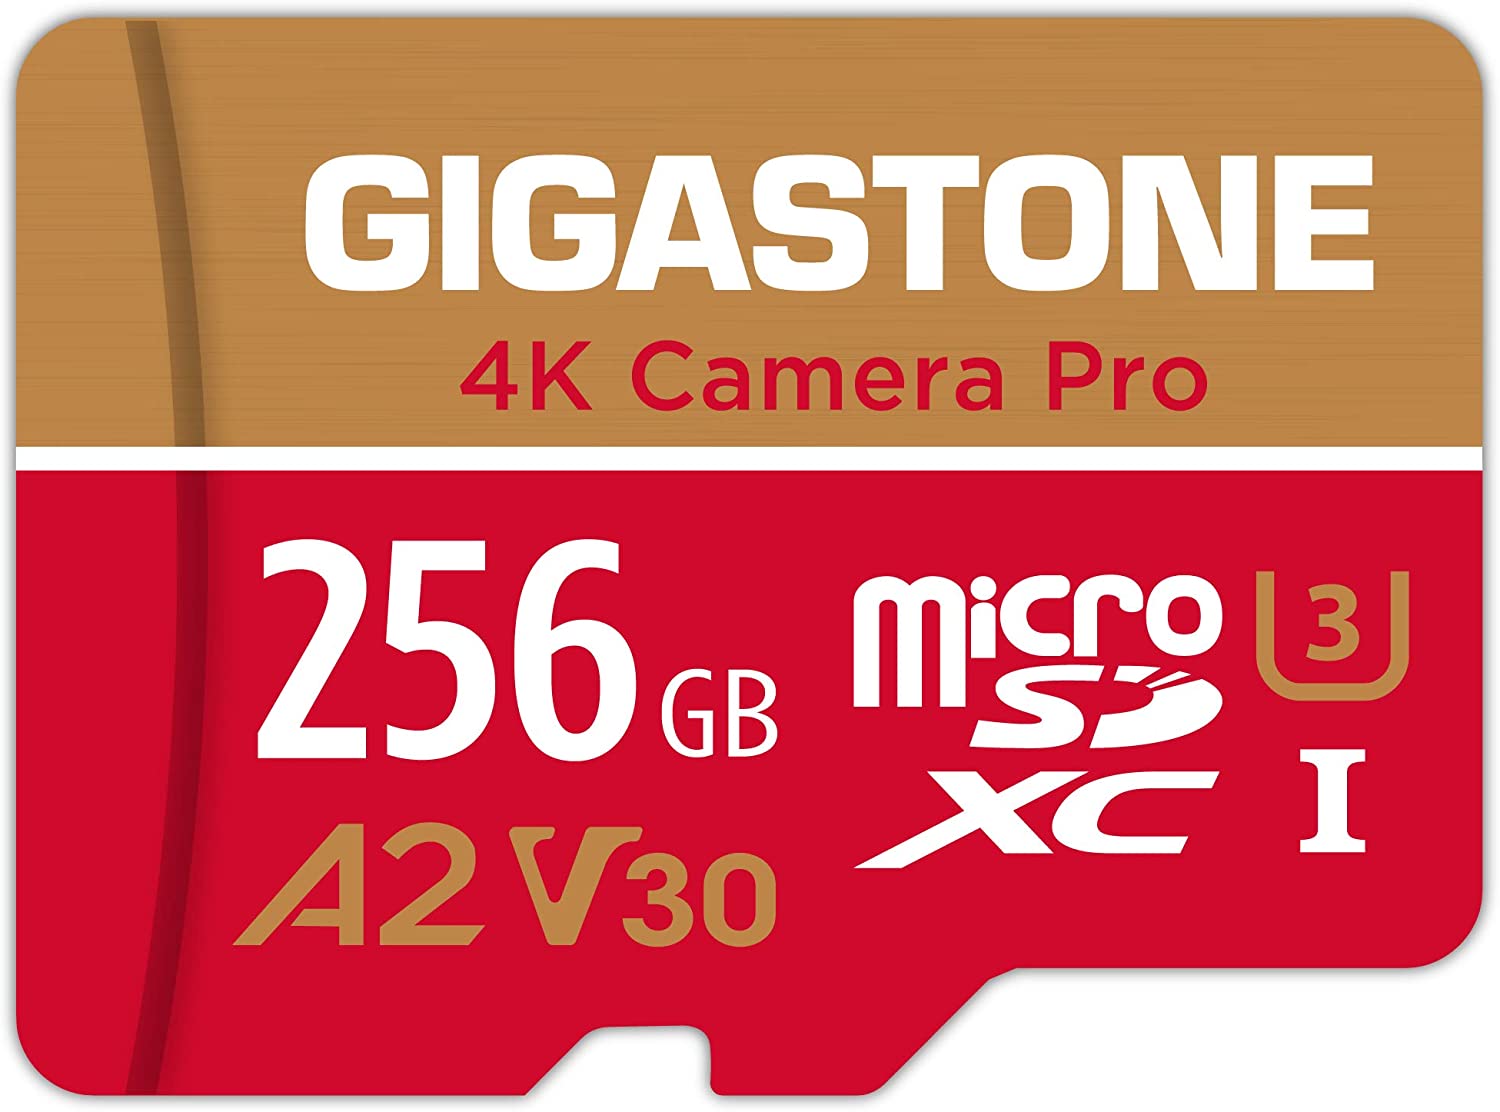 Gigastone 256GB microSD Card